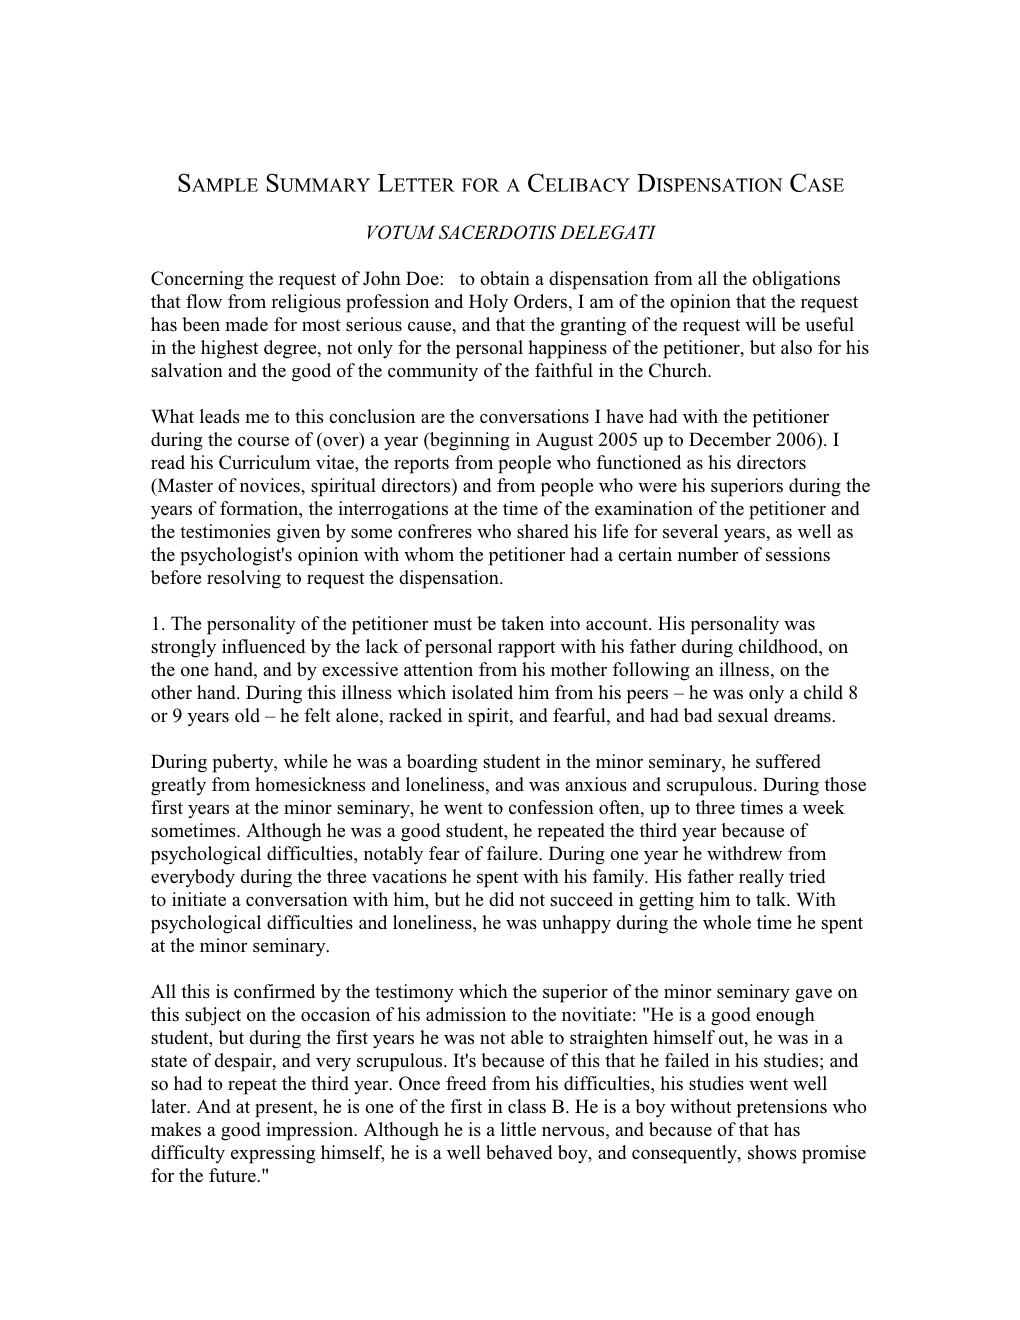 Sample Summary Letter for a Celibacy Dispensation Case